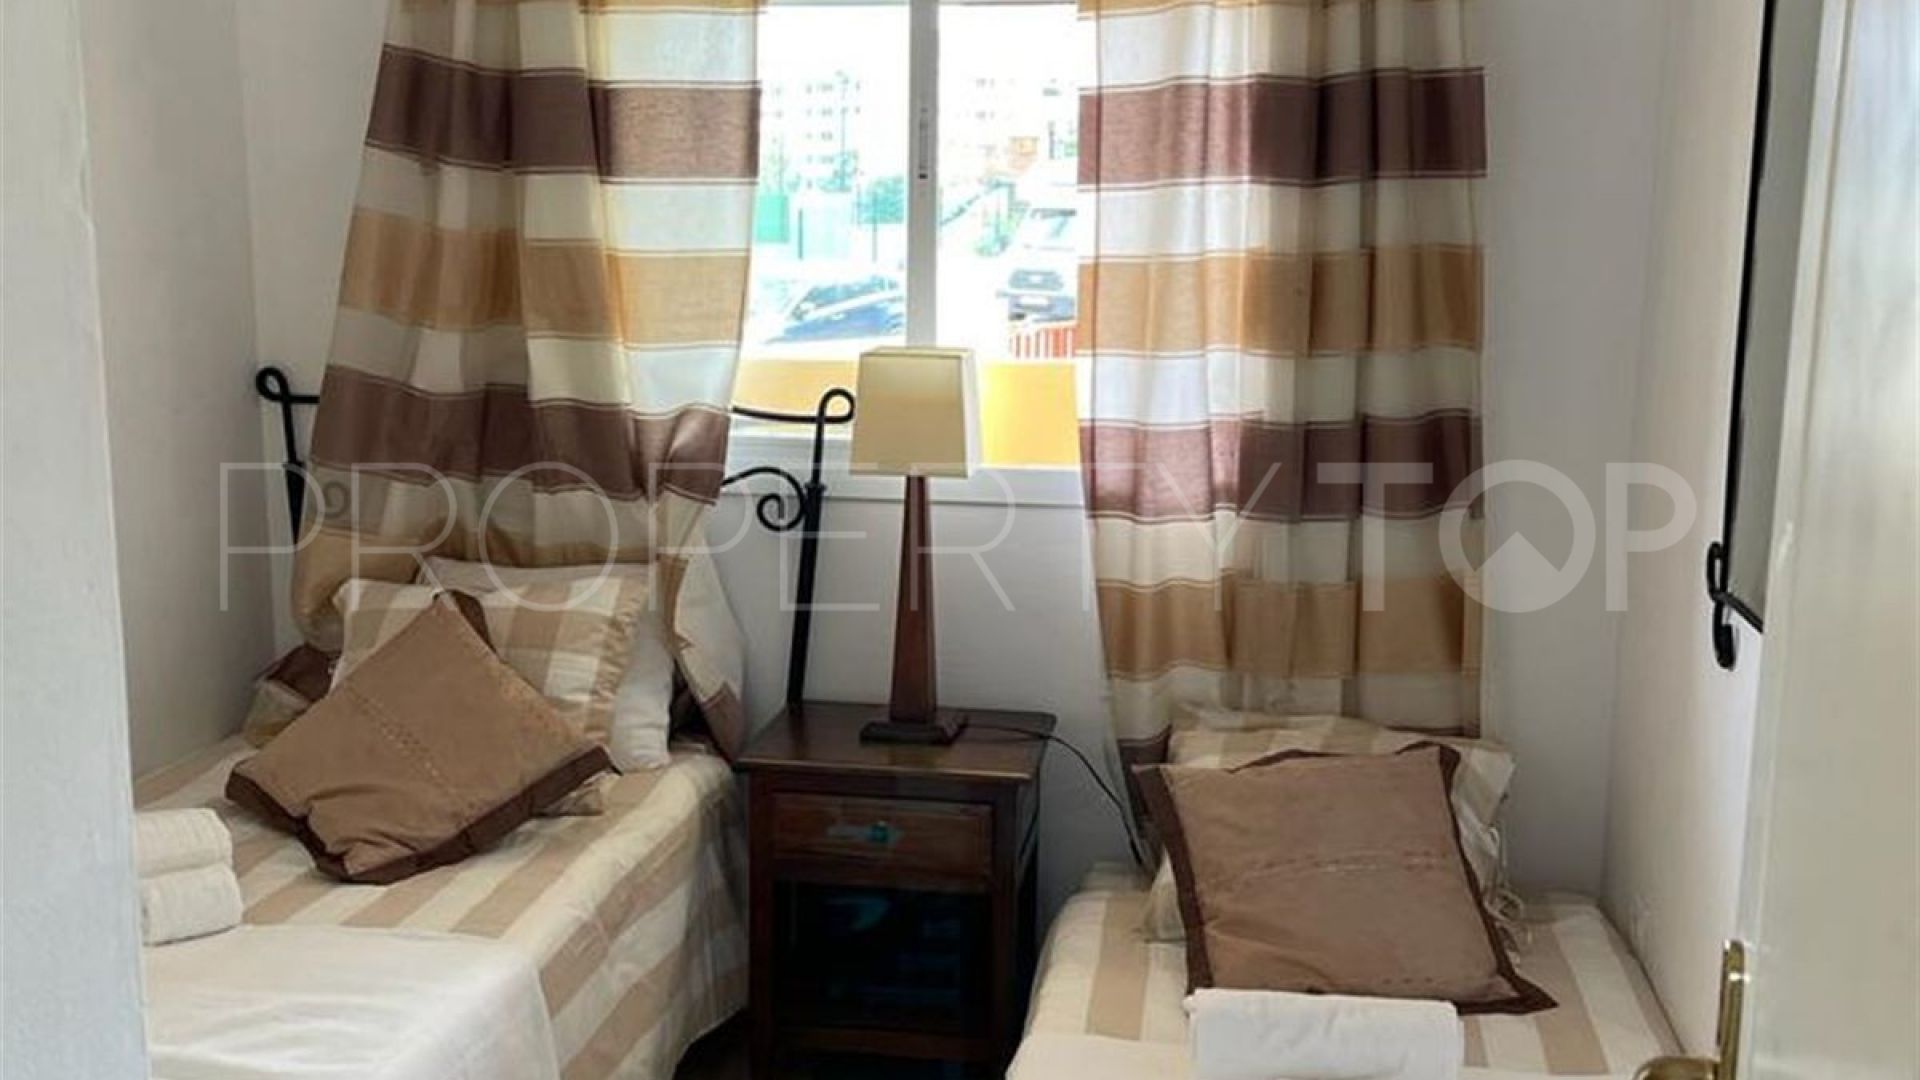 2 bedrooms ground floor apartment for sale in Manilva